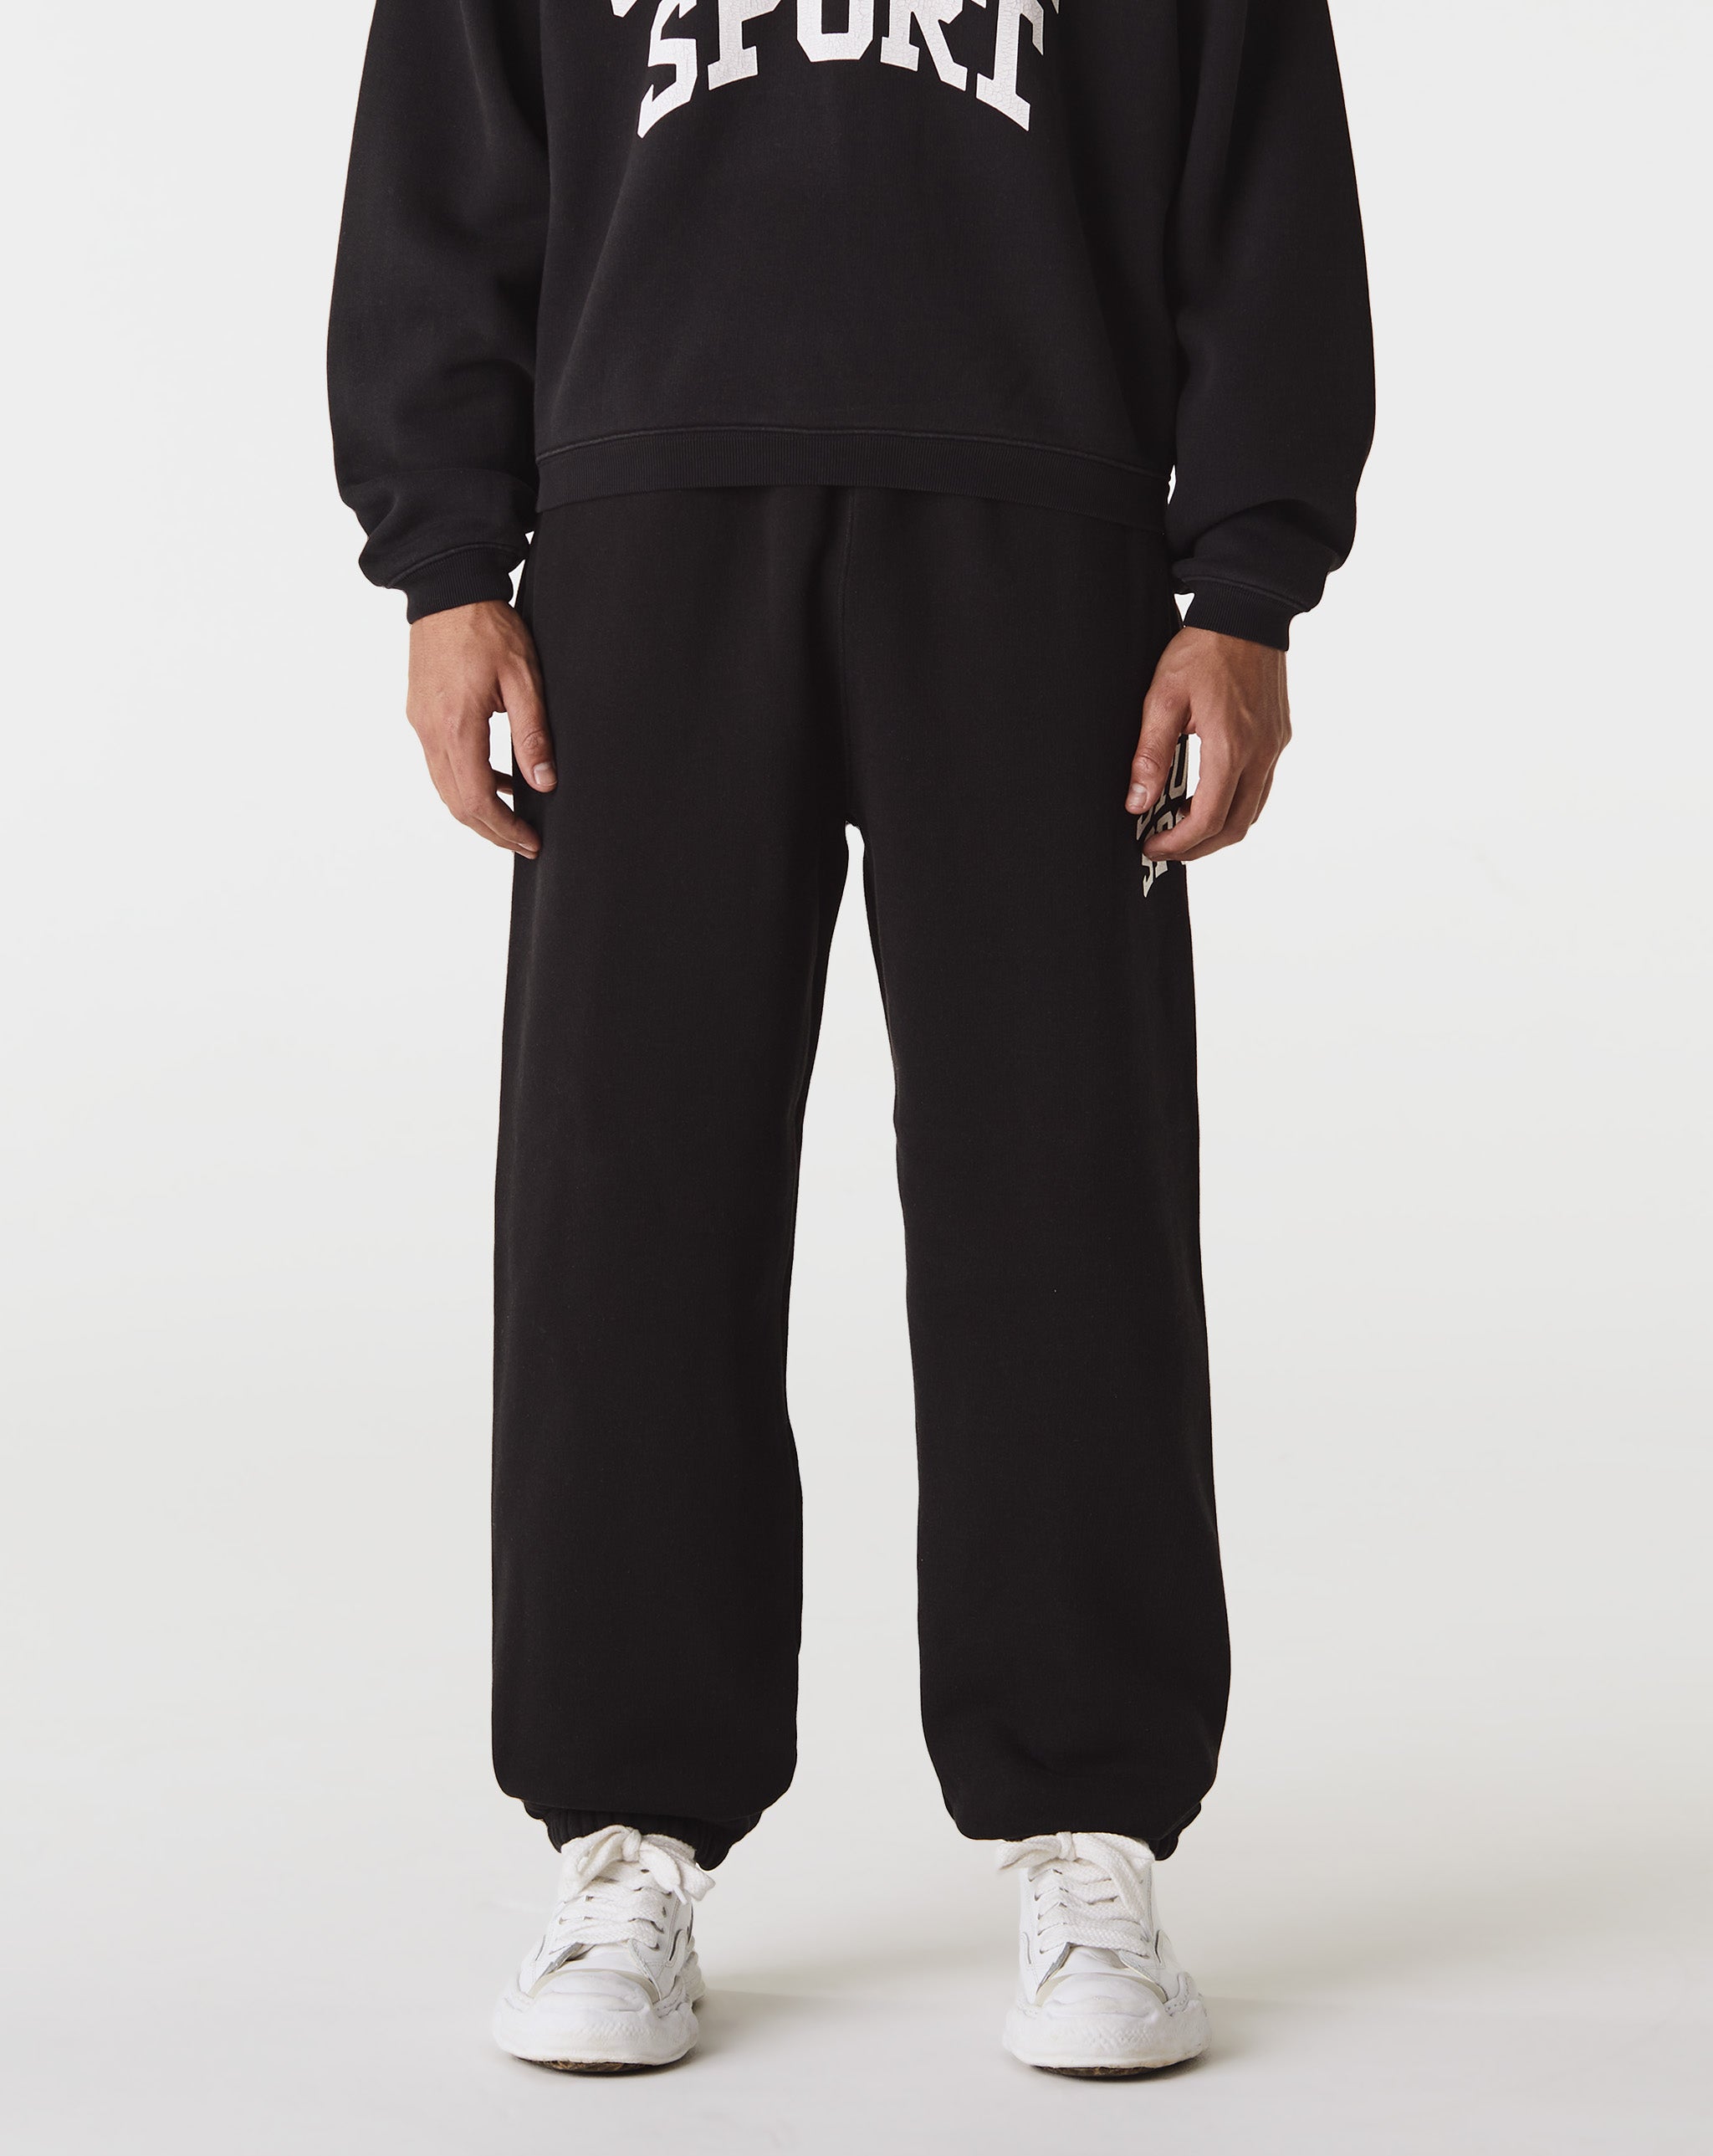 Stüssy Sport Crackle Fleece Pants  - Cheap 127-0 Jordan outlet